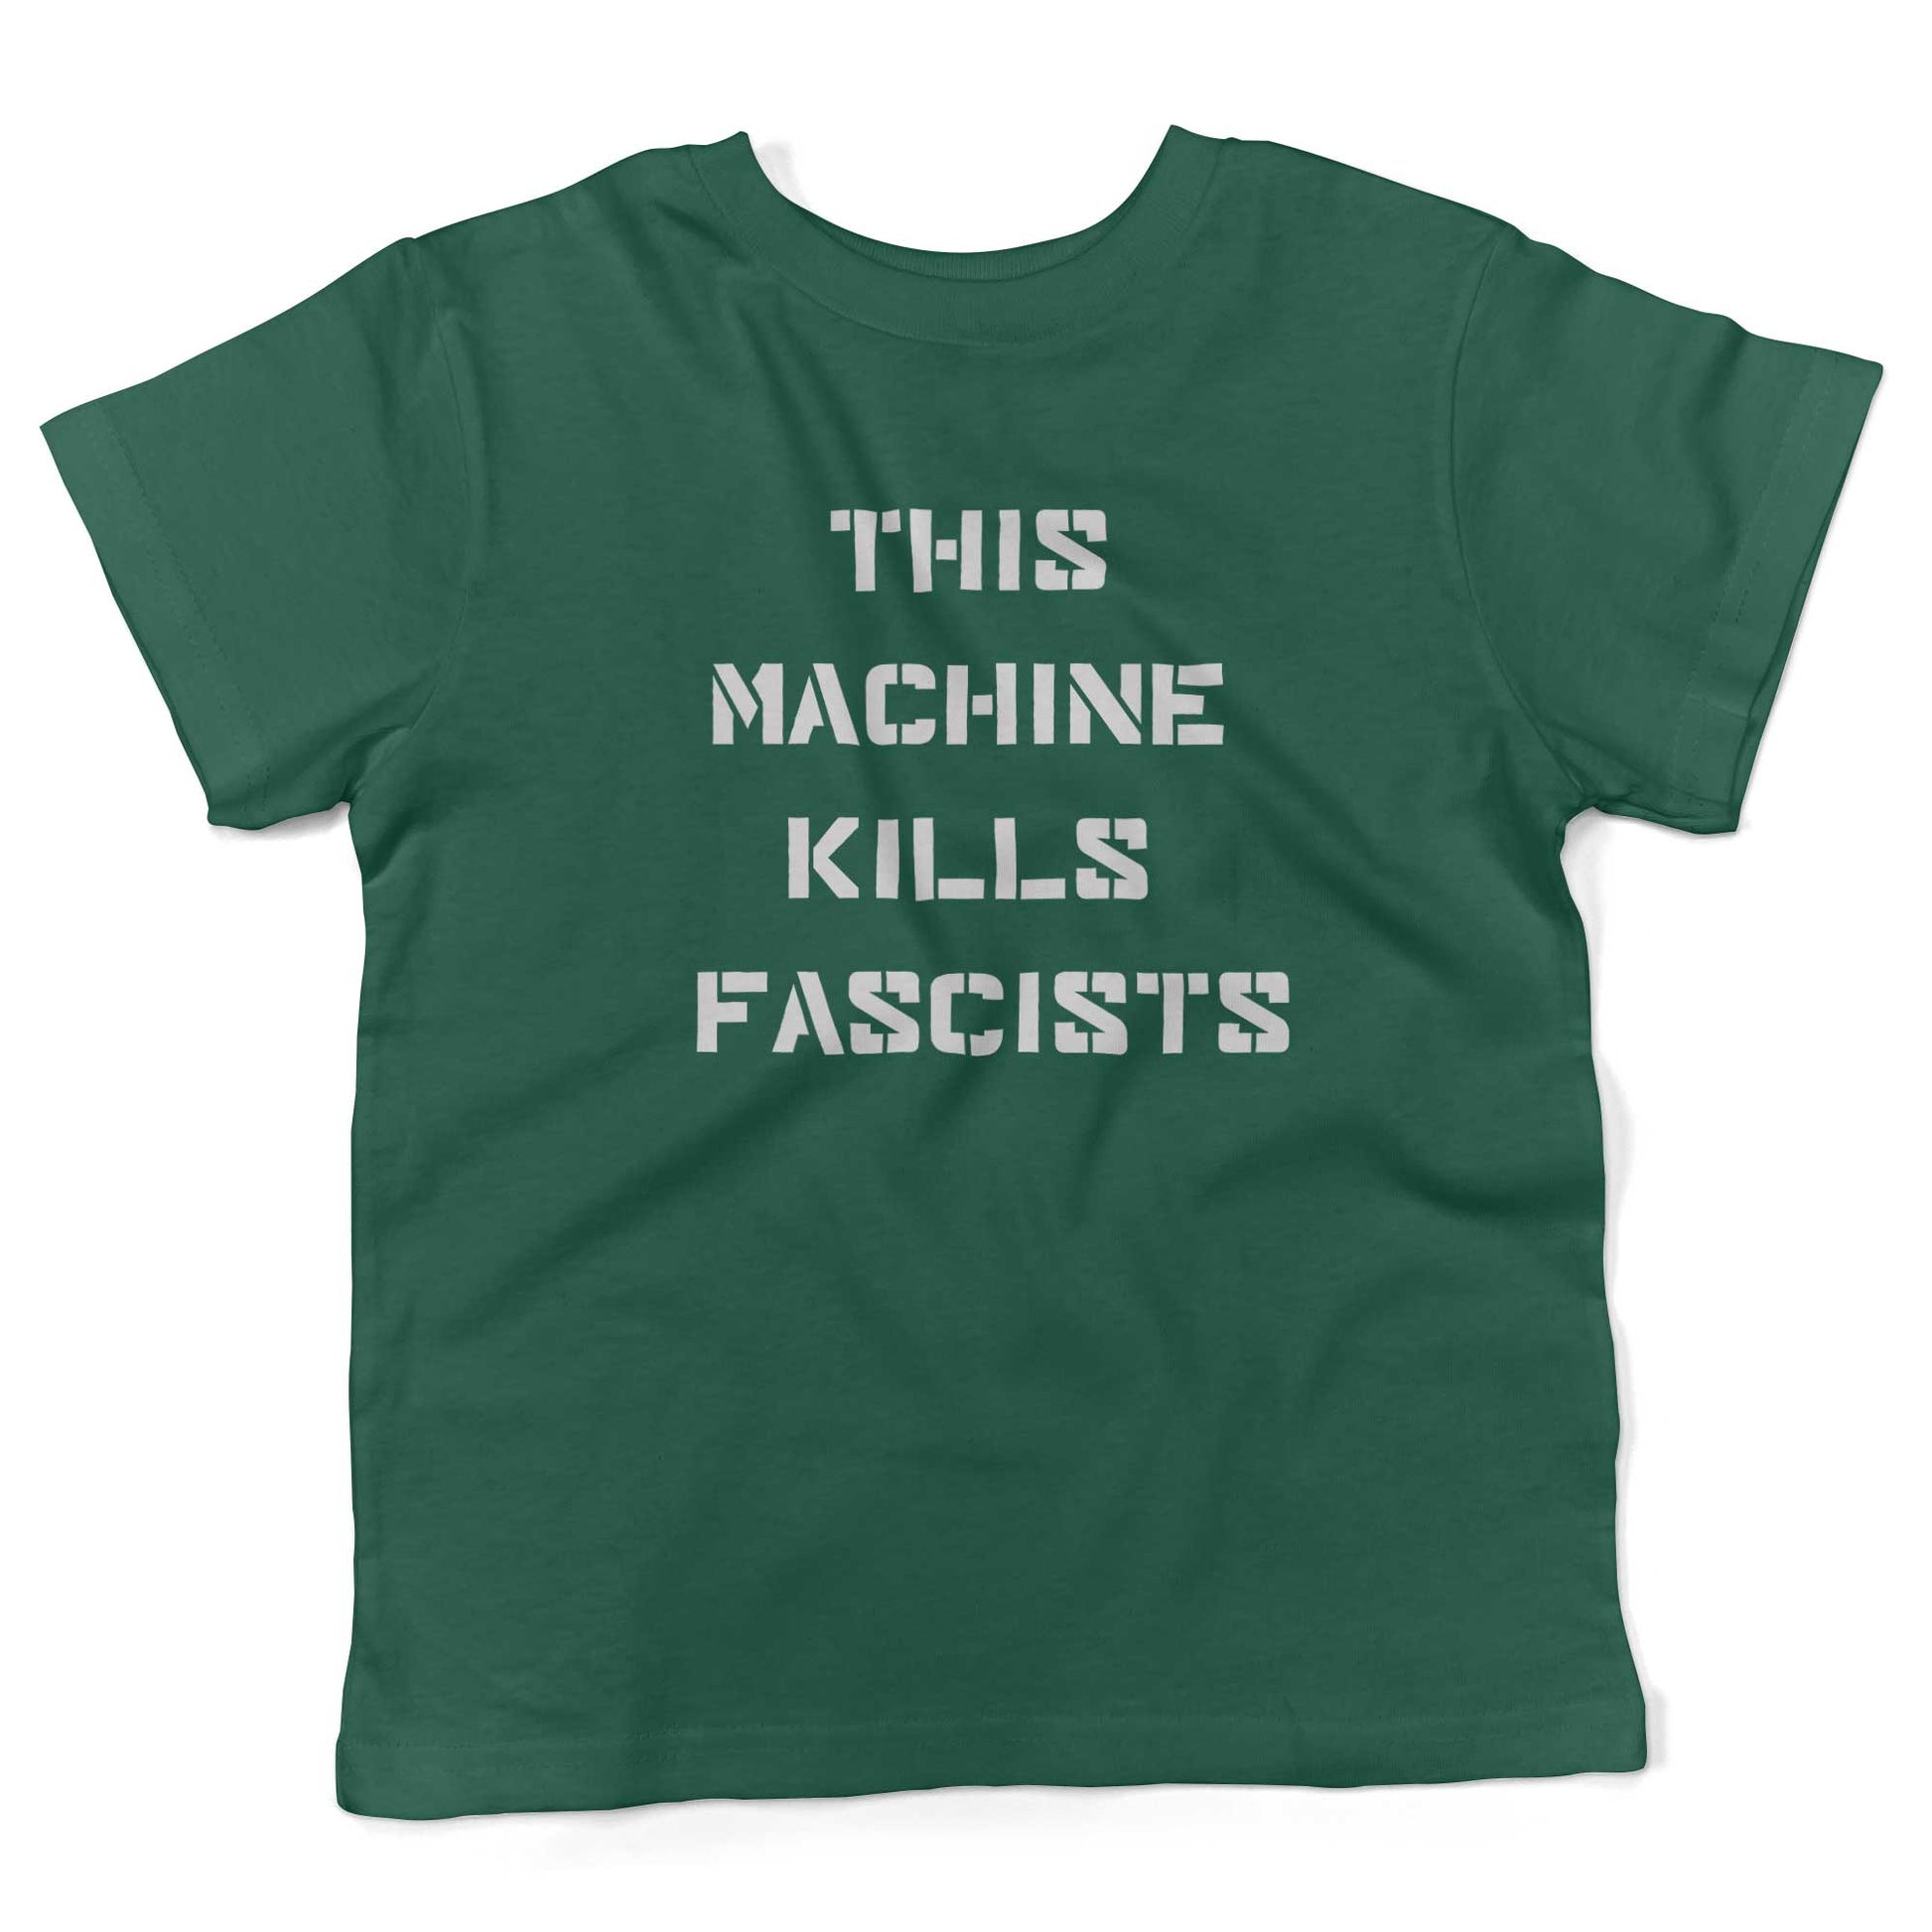 This Machine Kills Fascists Toddler Shirt-Kelly Green-2T